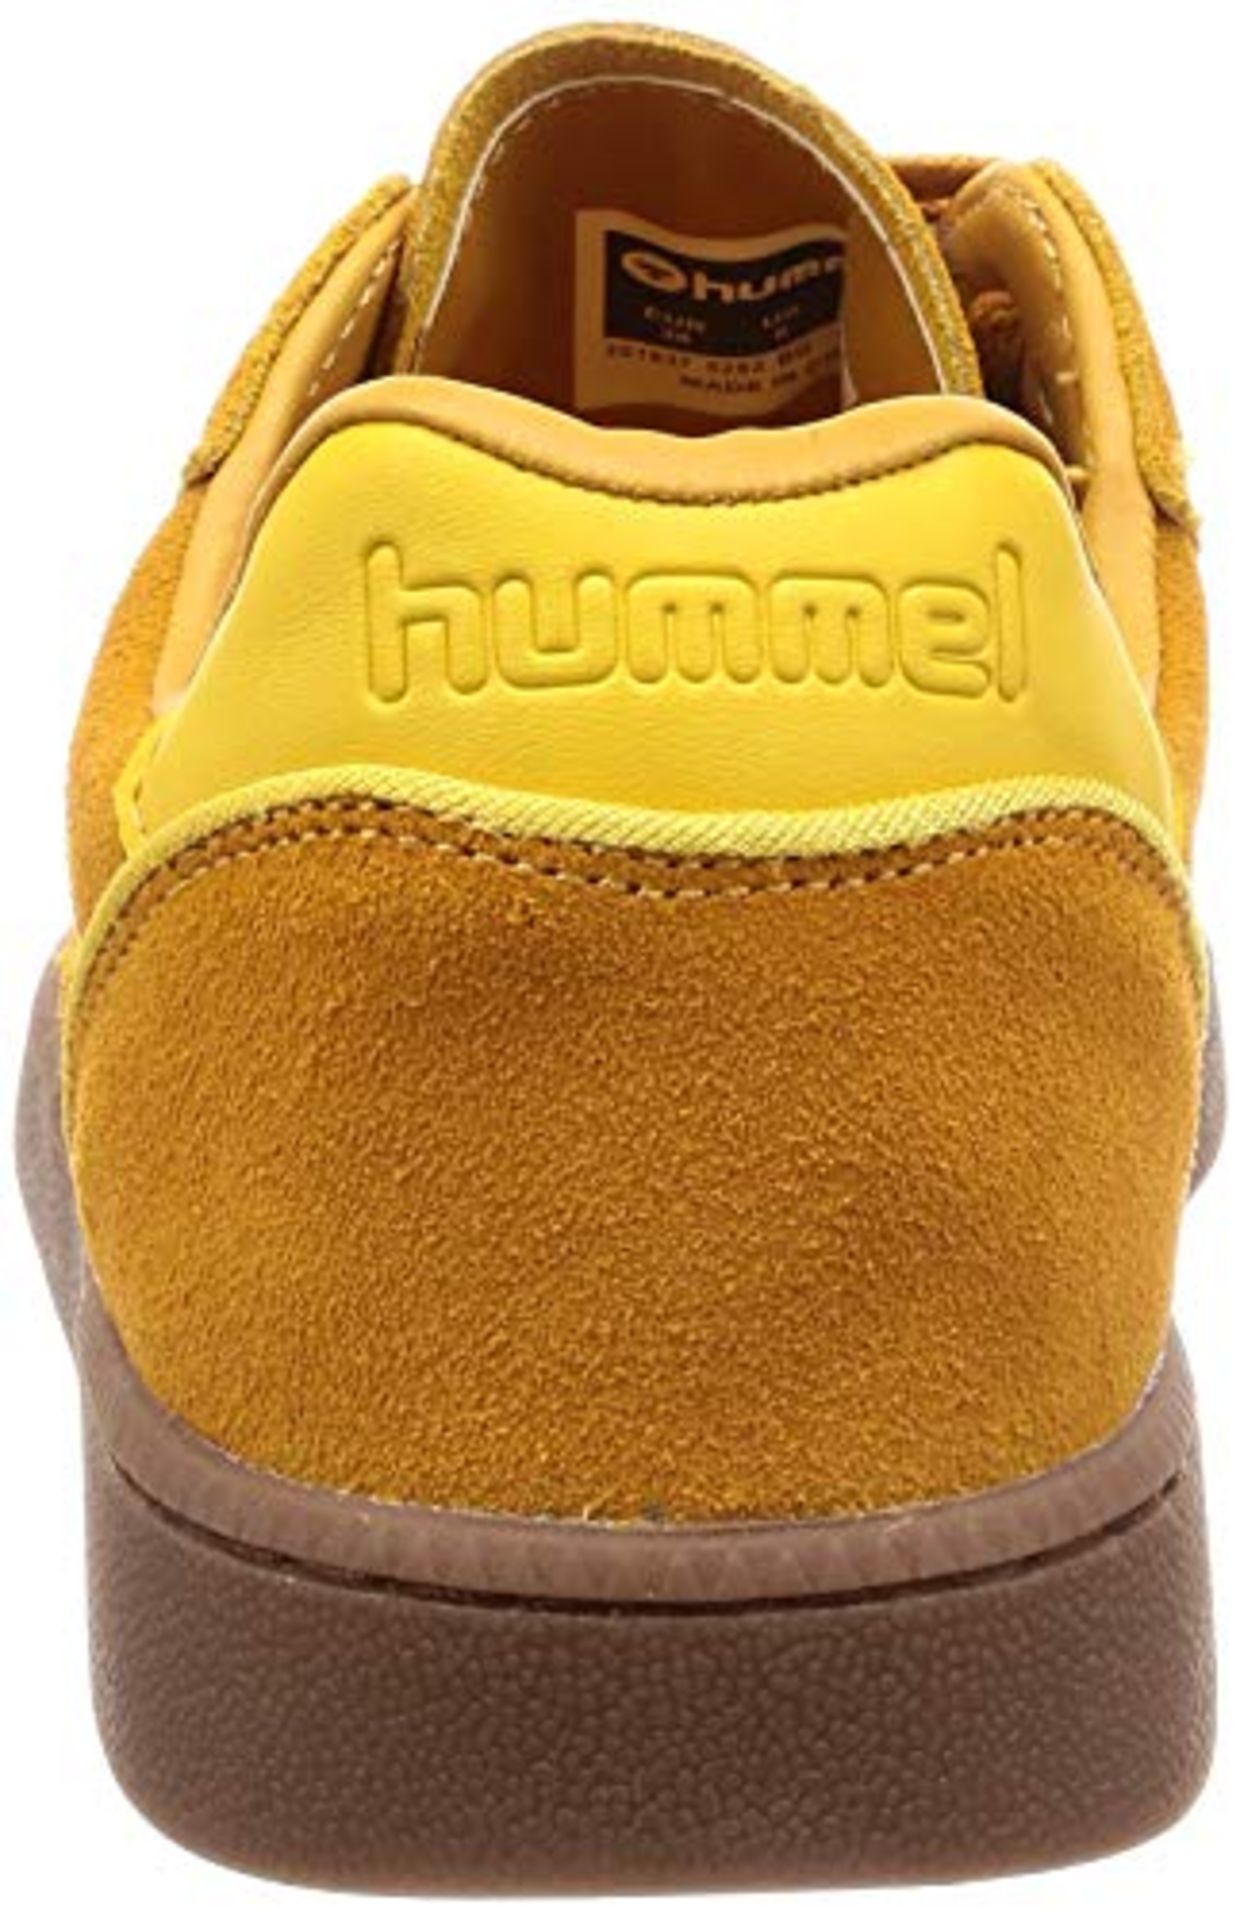 1 x Hummel Team Shoes Yellow HB, HM201937, Sunflower, 41 (EU) Size: 41 EU | EAN: 5700494865813 - Image 2 of 8